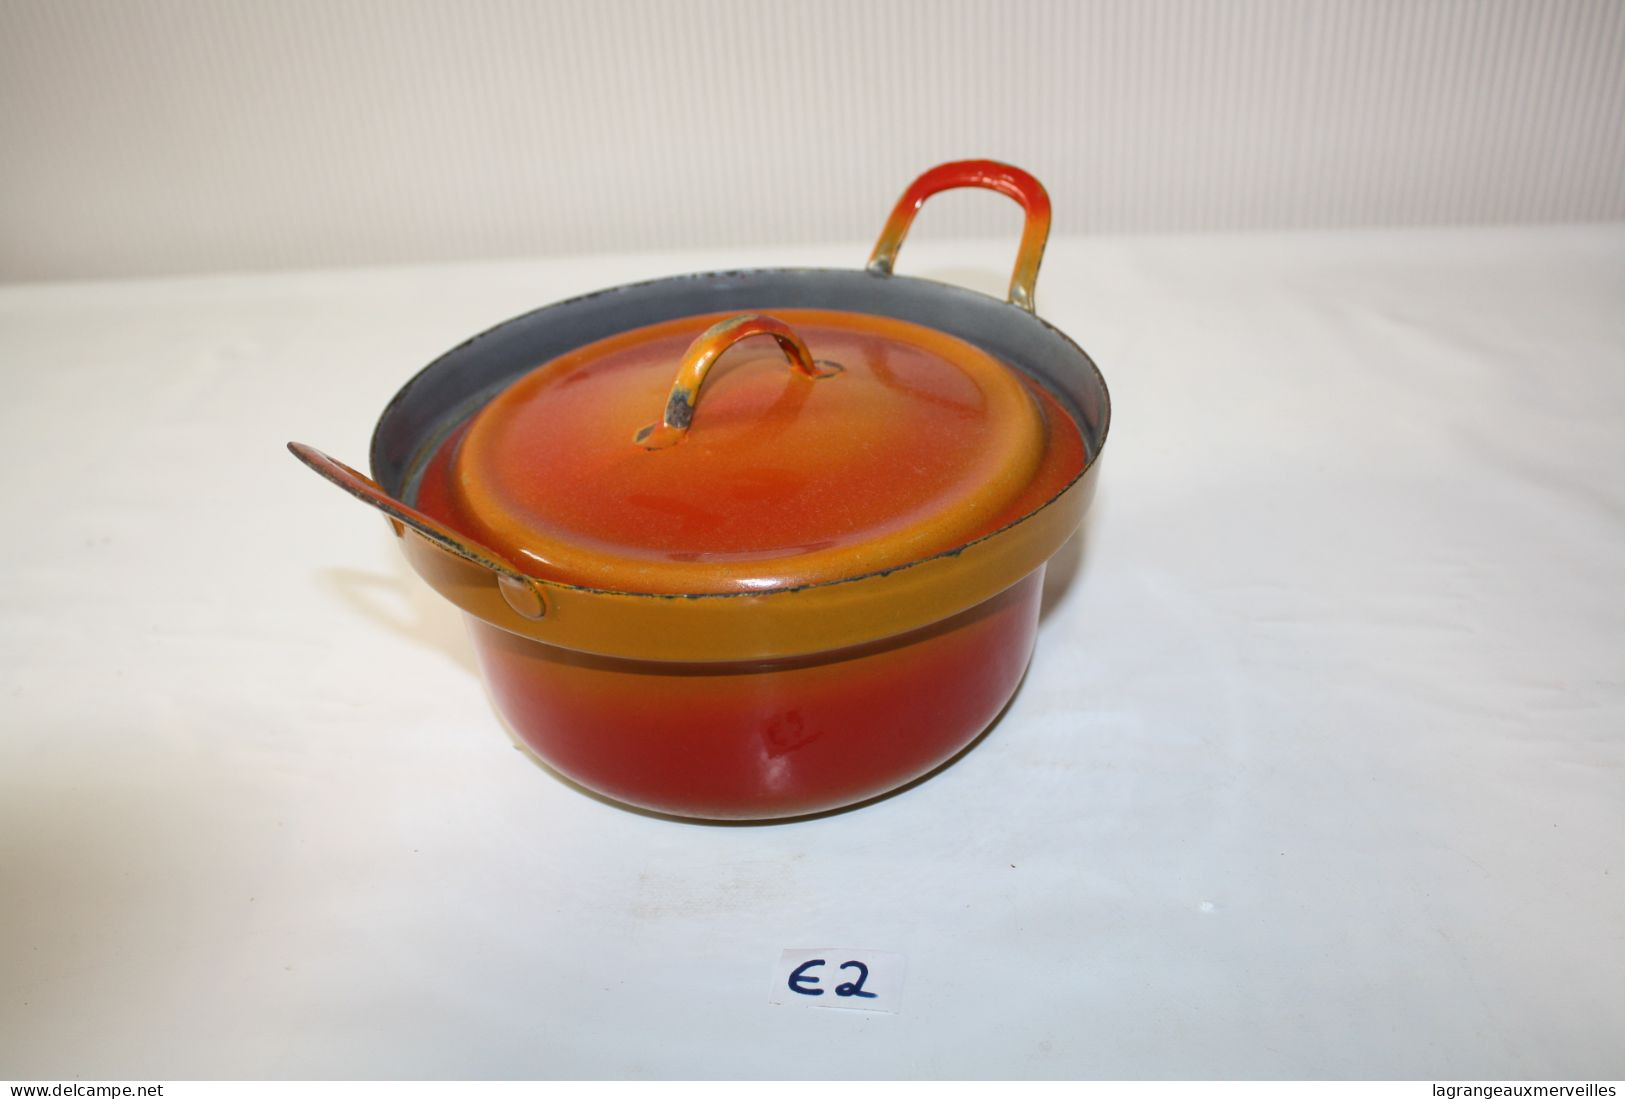 E2 Ancienne Marmite - Casserole- Orange - Vintage - Auberge - Old School - Arte Popolare